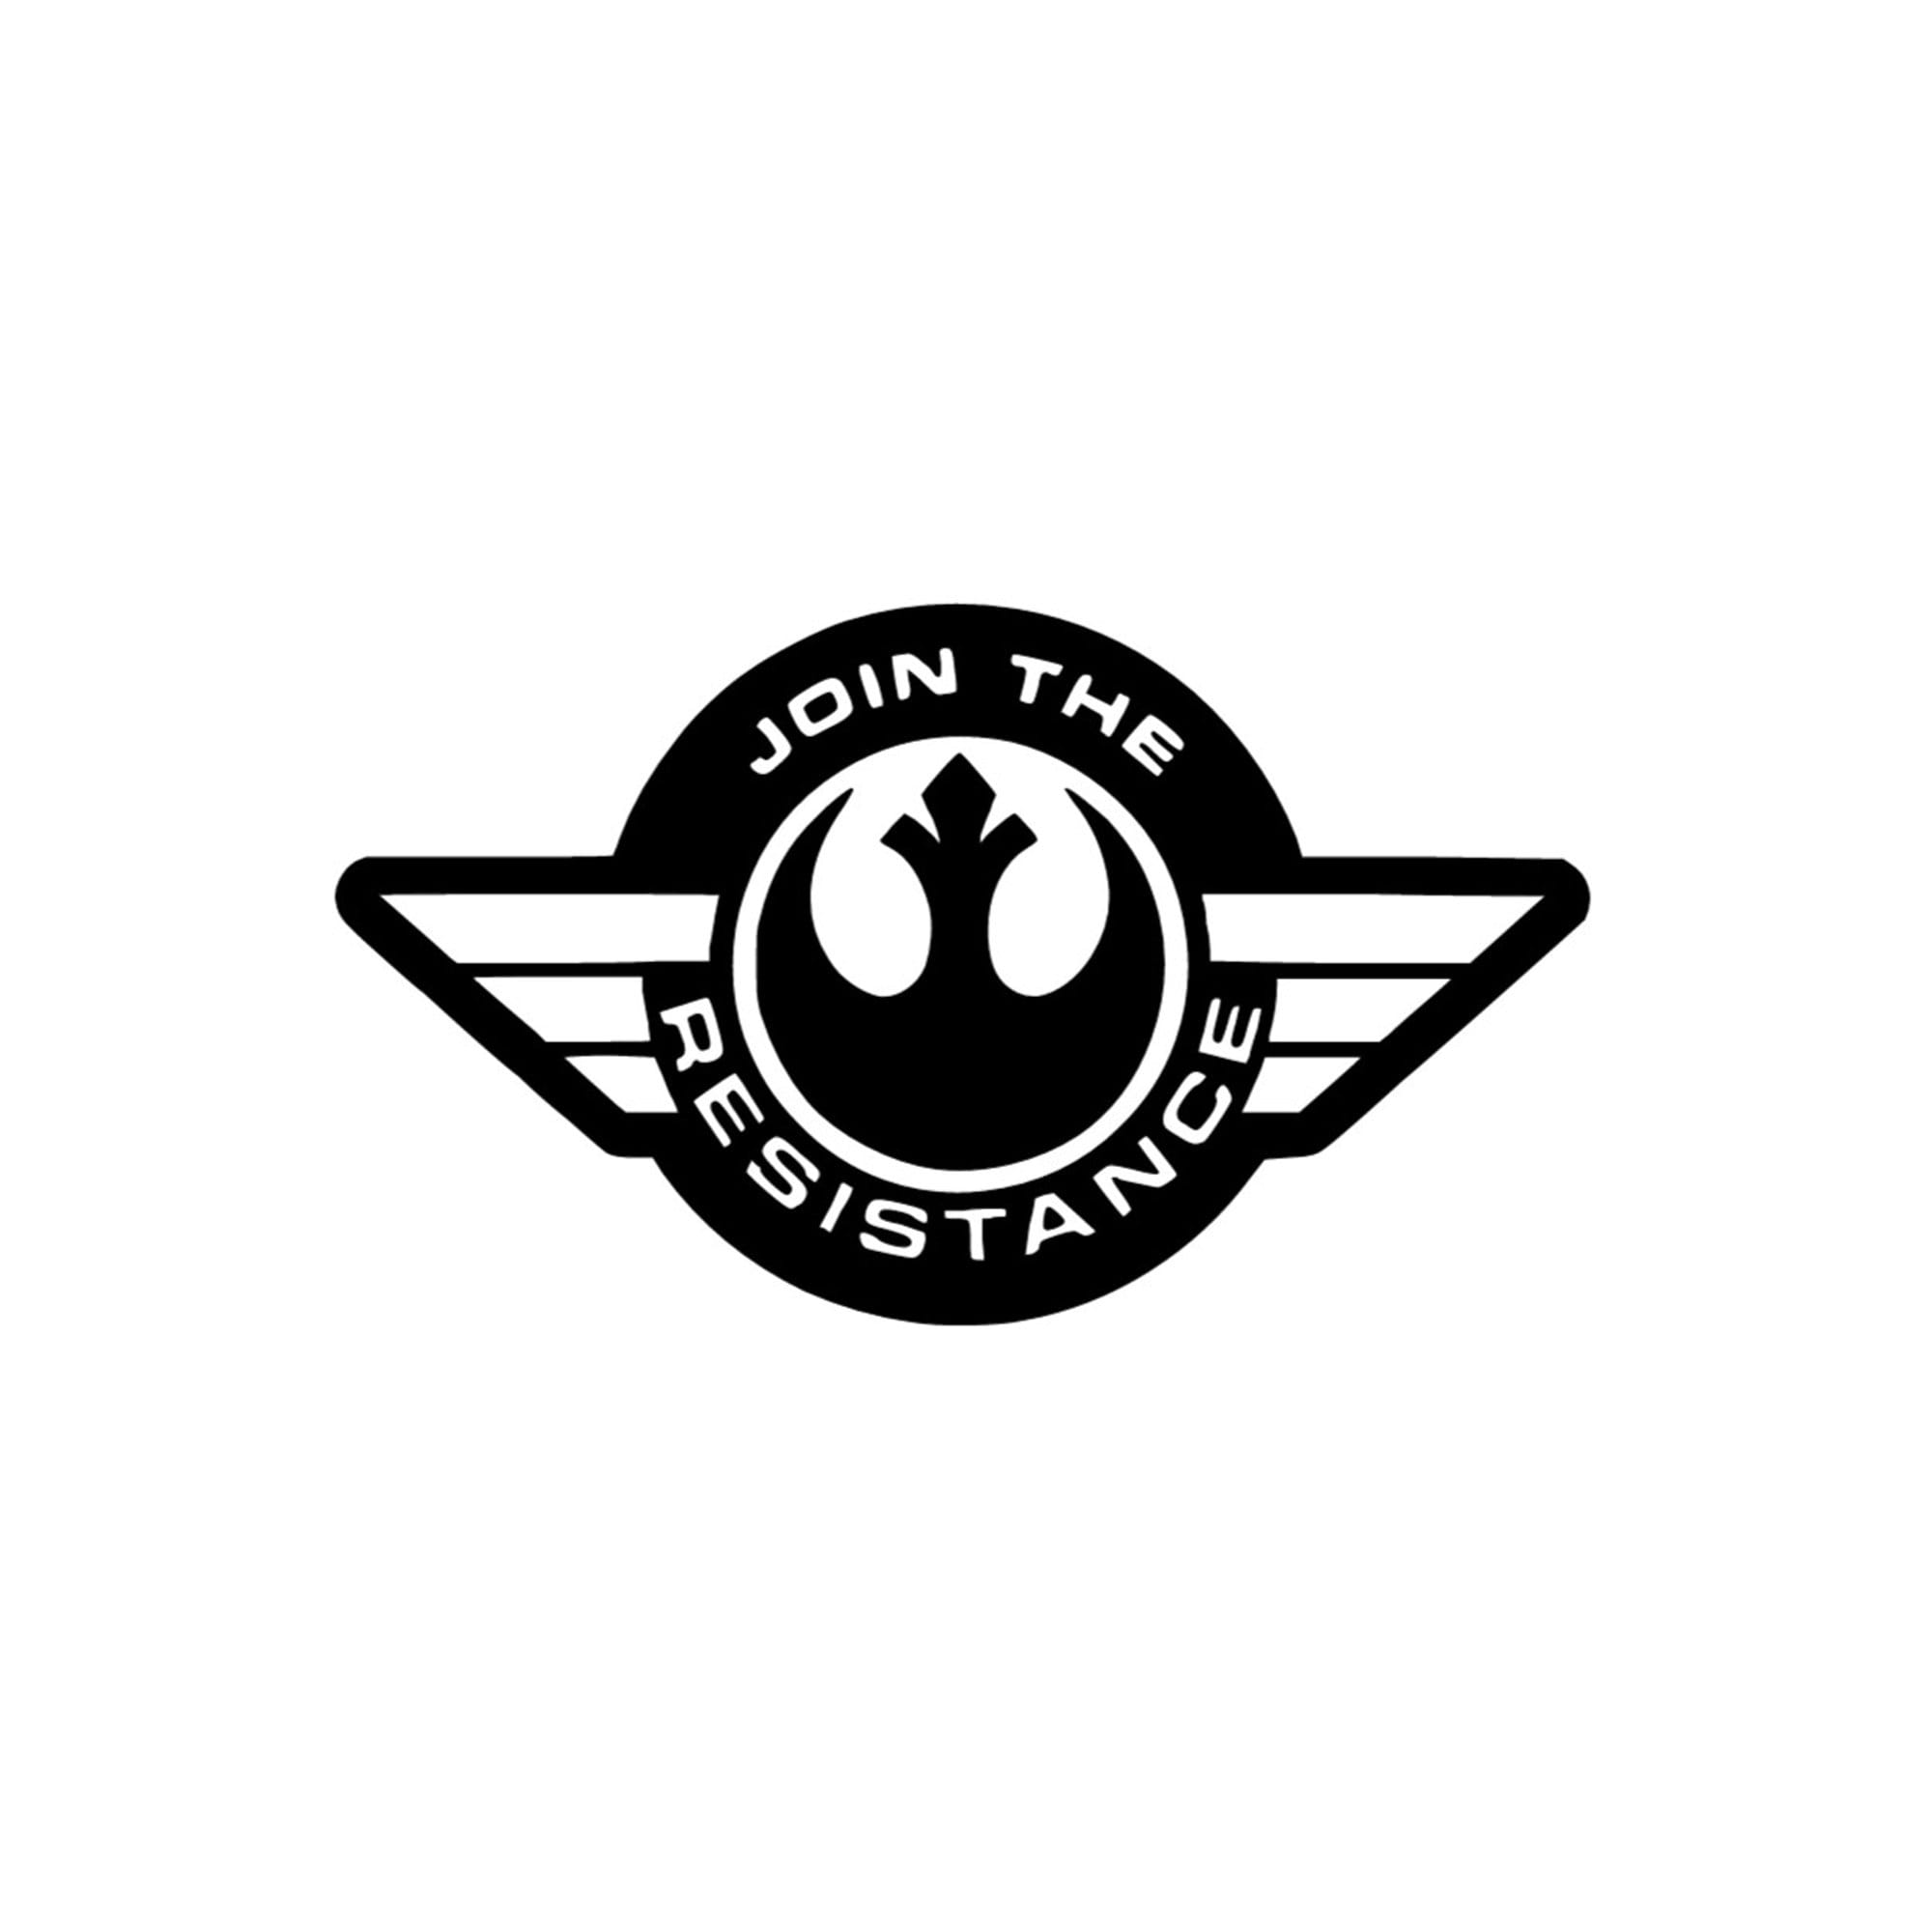 Star Wars Vehicle Vinyl Decal Sticker Join the Resistance VIVINYLDESIGN.CA 